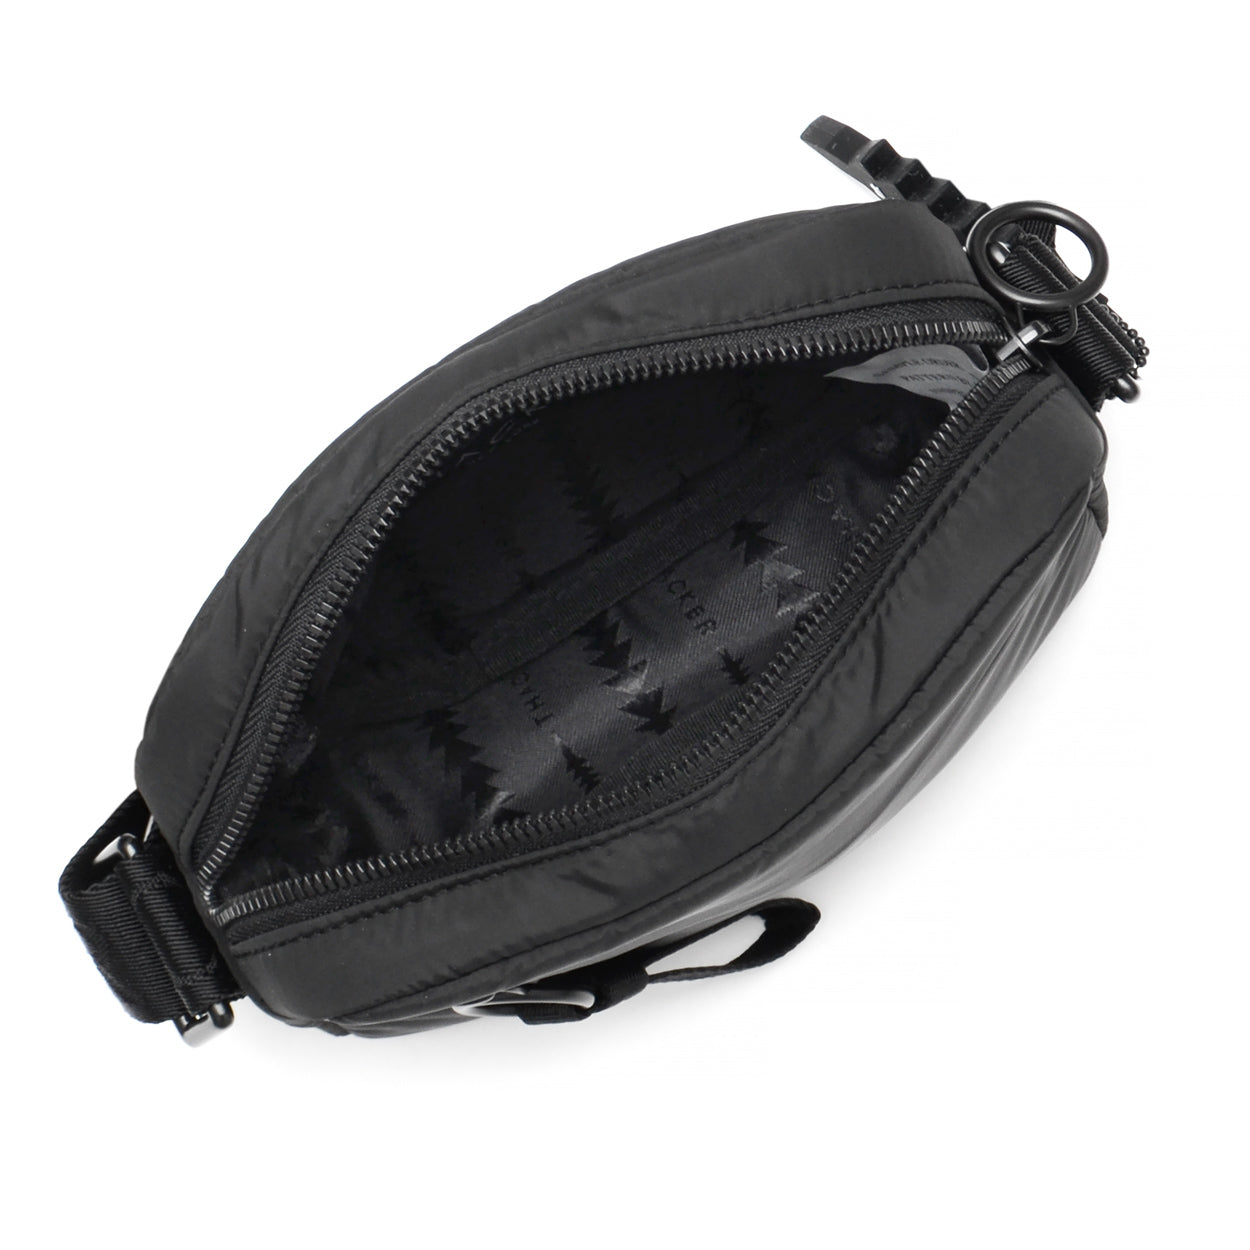 Feather camera bag | Black Nylon